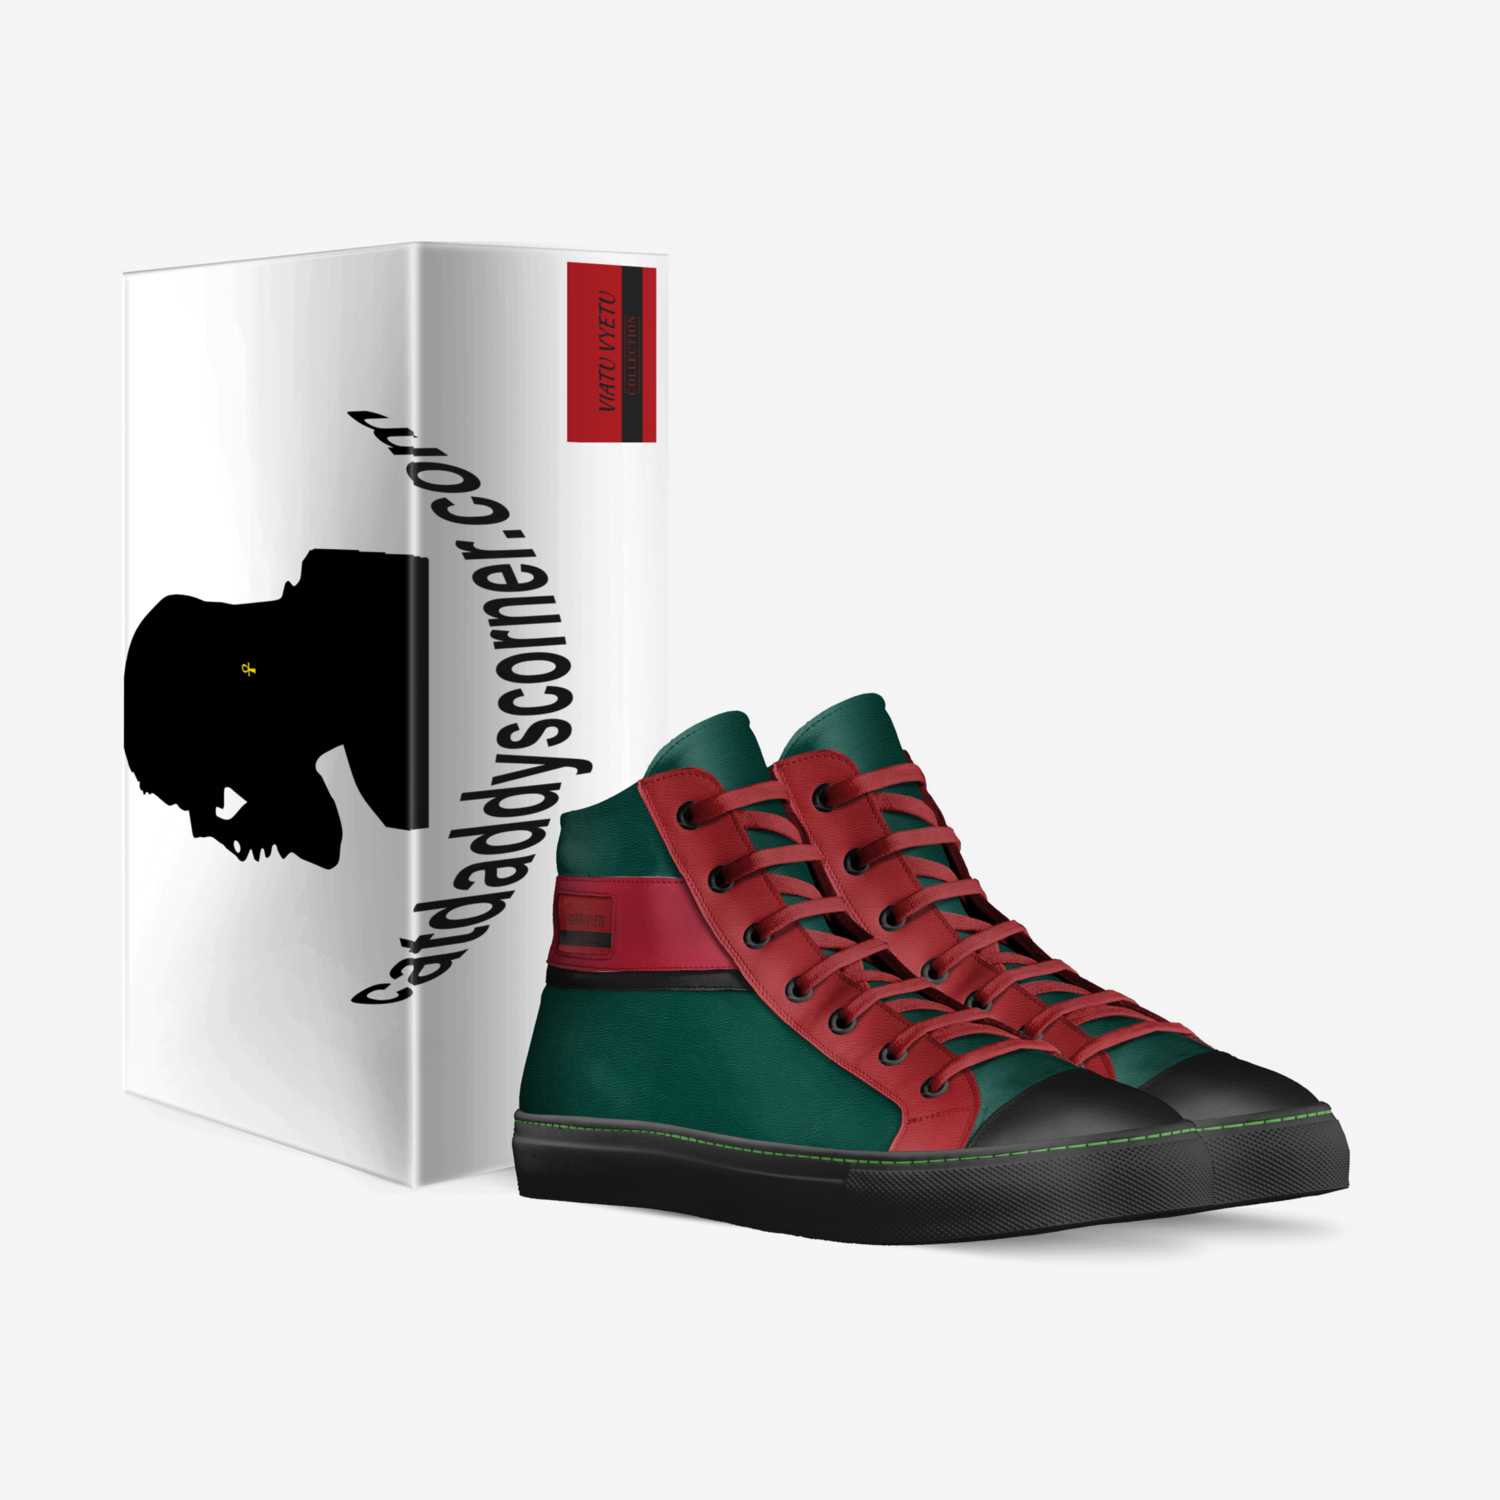 Ushindi custom made in Italy shoes by Scott Thomas | Box view